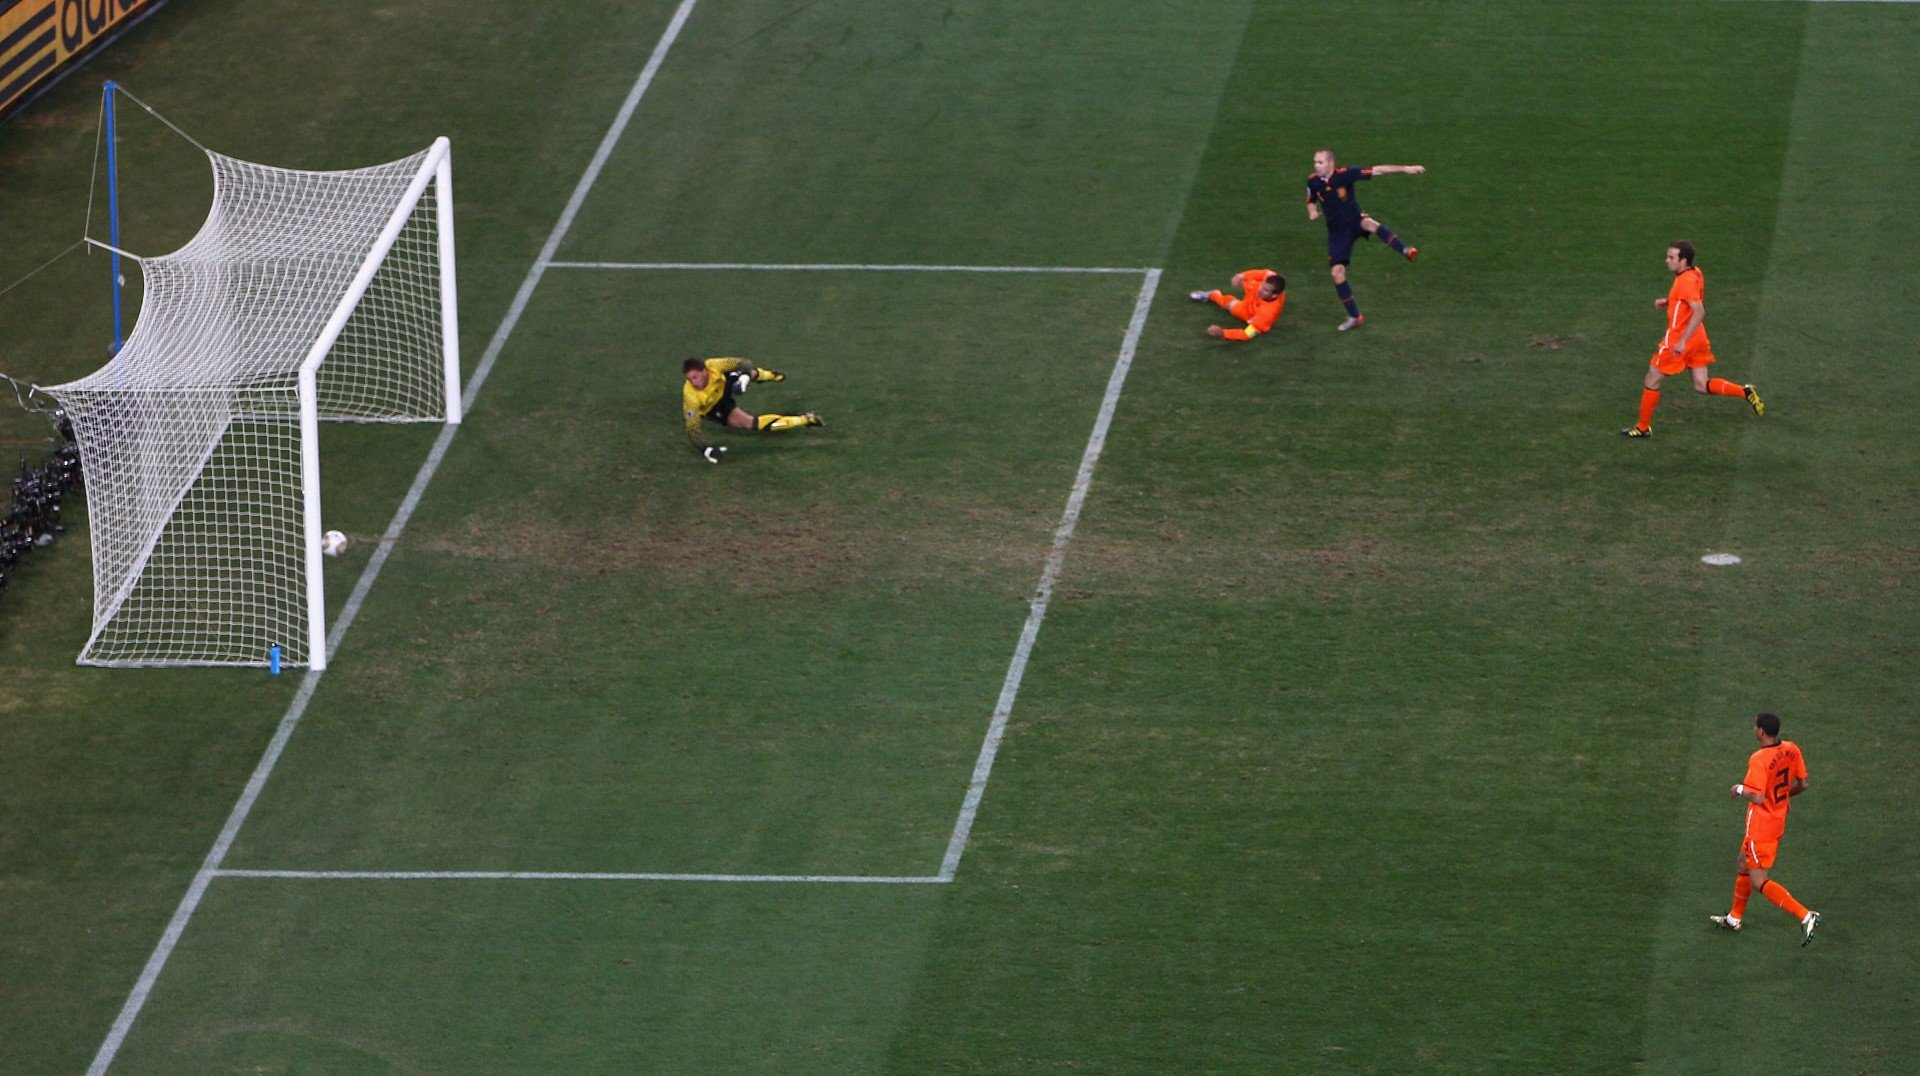 Иниеста, Испания - Нидерландия 1:0, 2010 г.